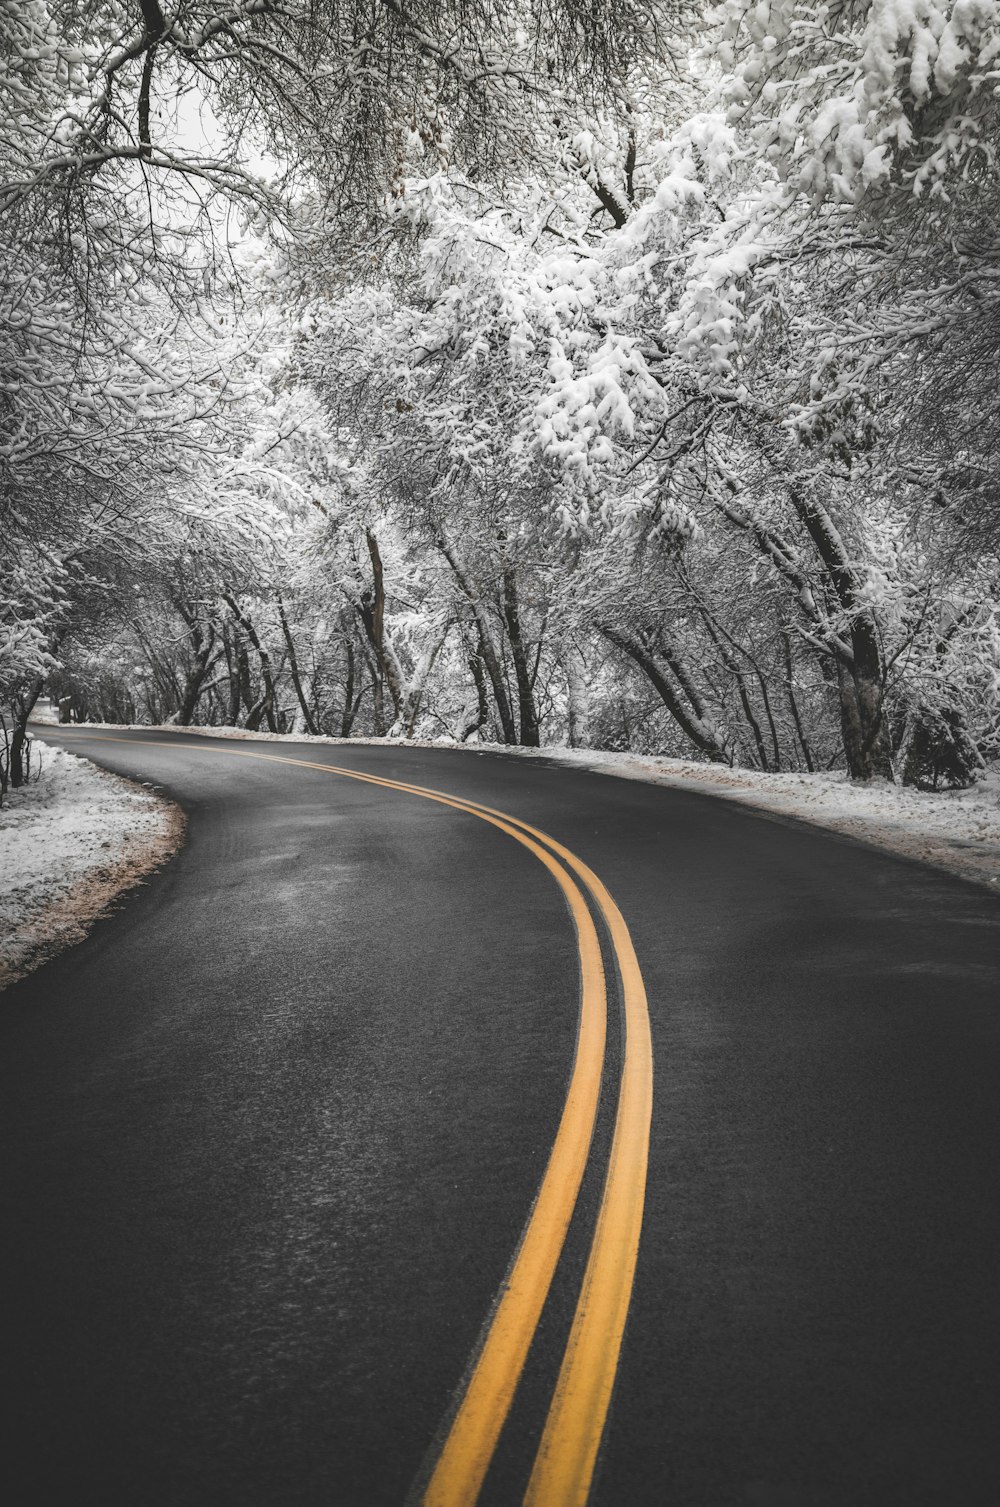 black asphalt road between snow covered trees during daytime